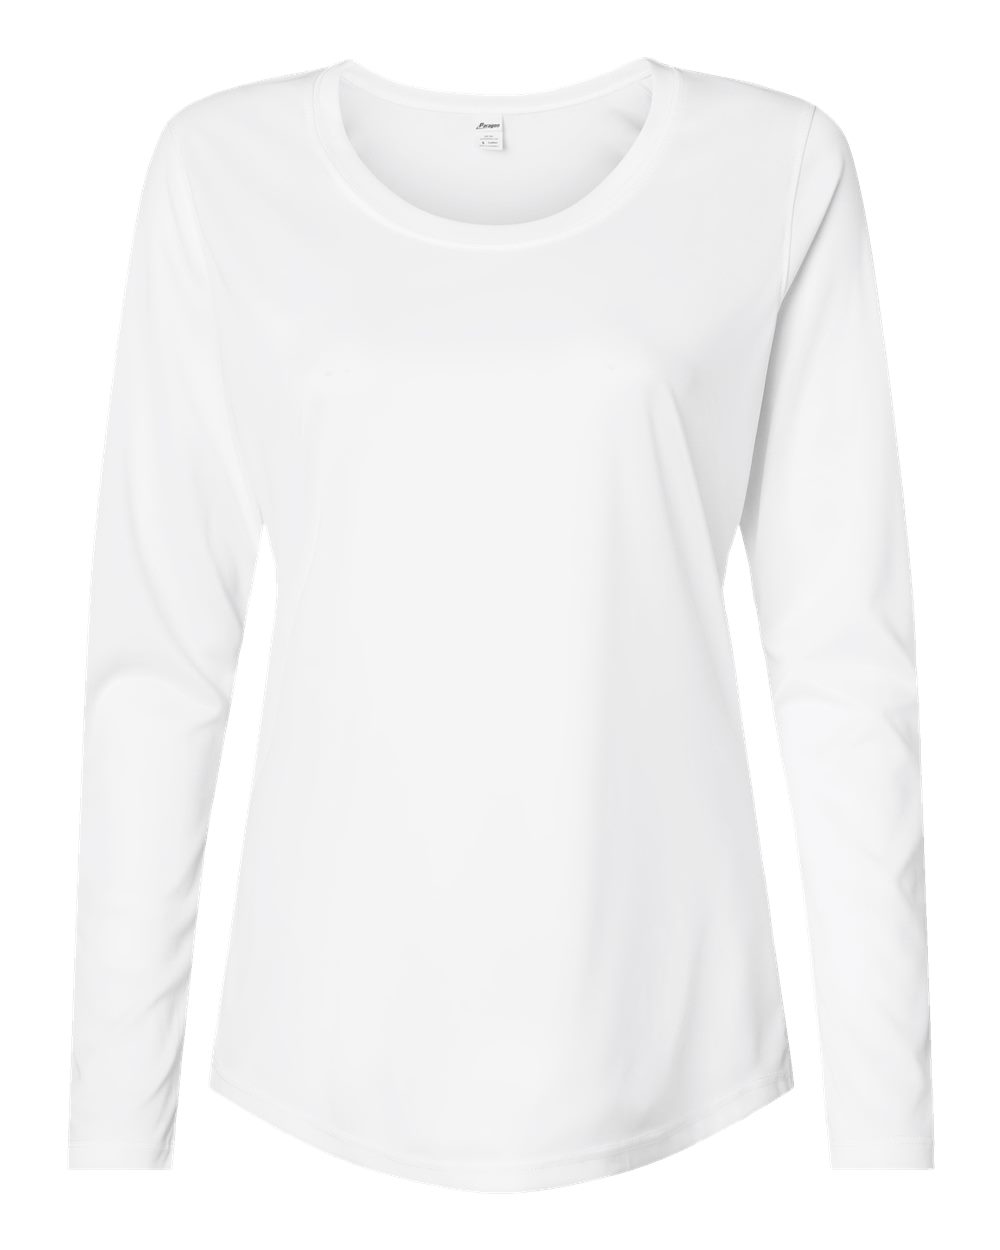 Paragon 214 - Women\'s Long Islander Performance Long Sleeve T-Shirt